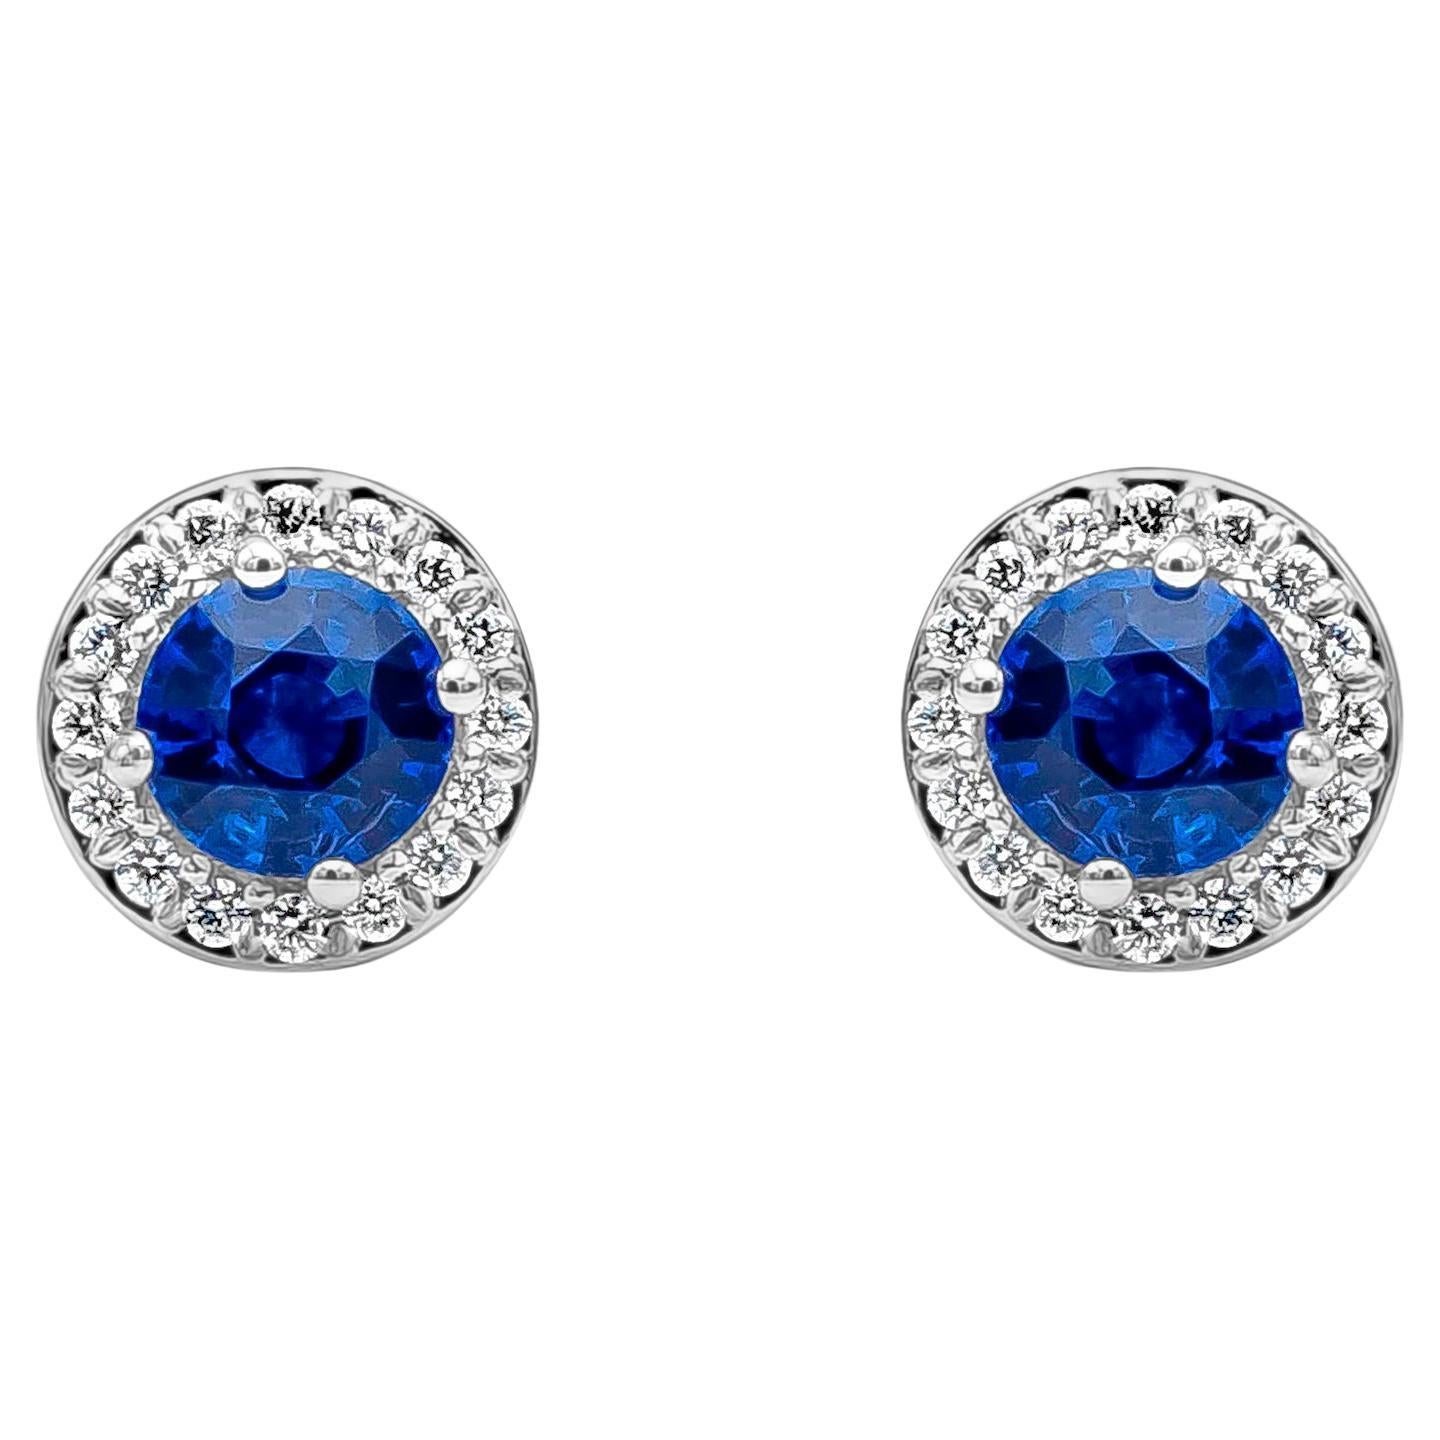 Roman Malakov 1.42 Carats Total Blue Sapphire and Diamonds Halo Stud Earrings For Sale